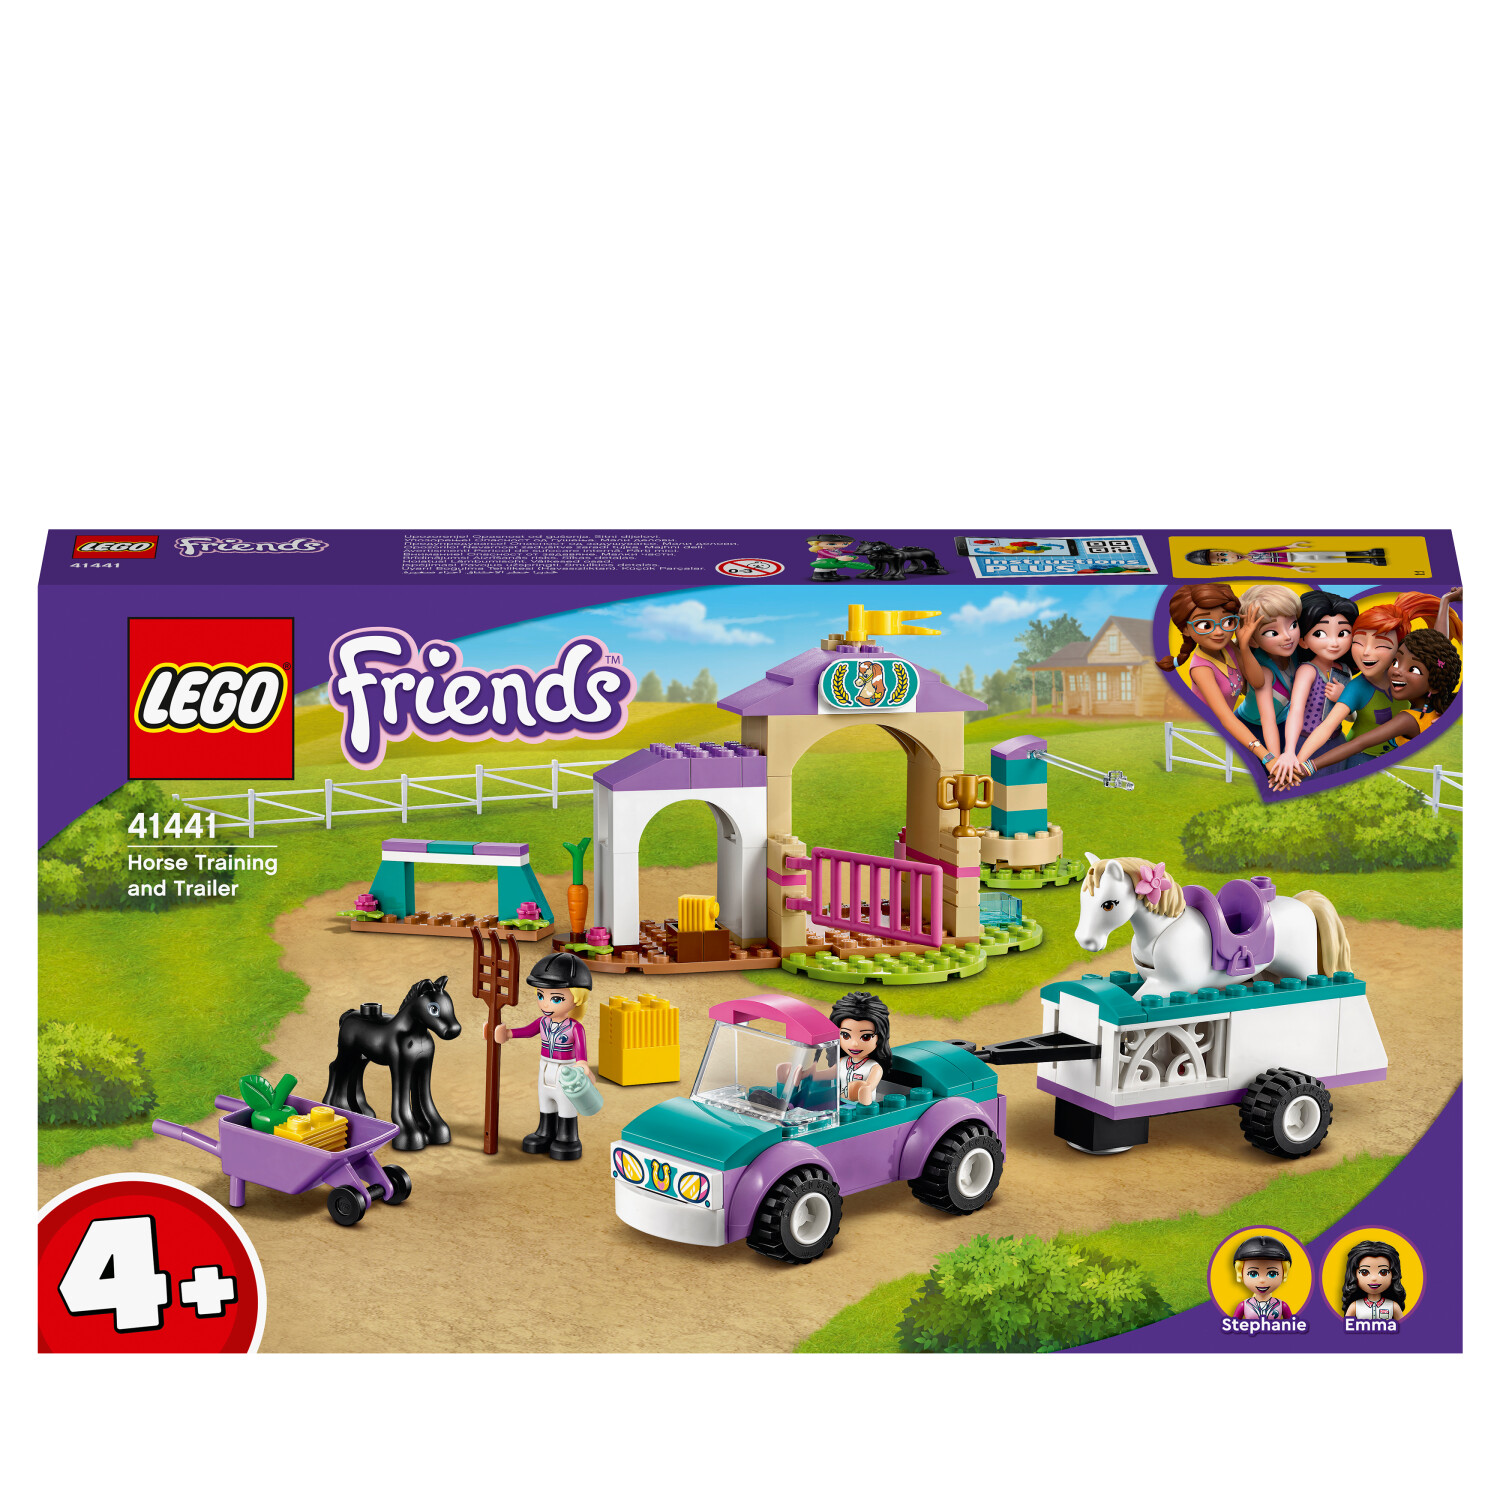 LEGO® Friends 41371 La remorque à chevaux de Mia - Lego - Achat